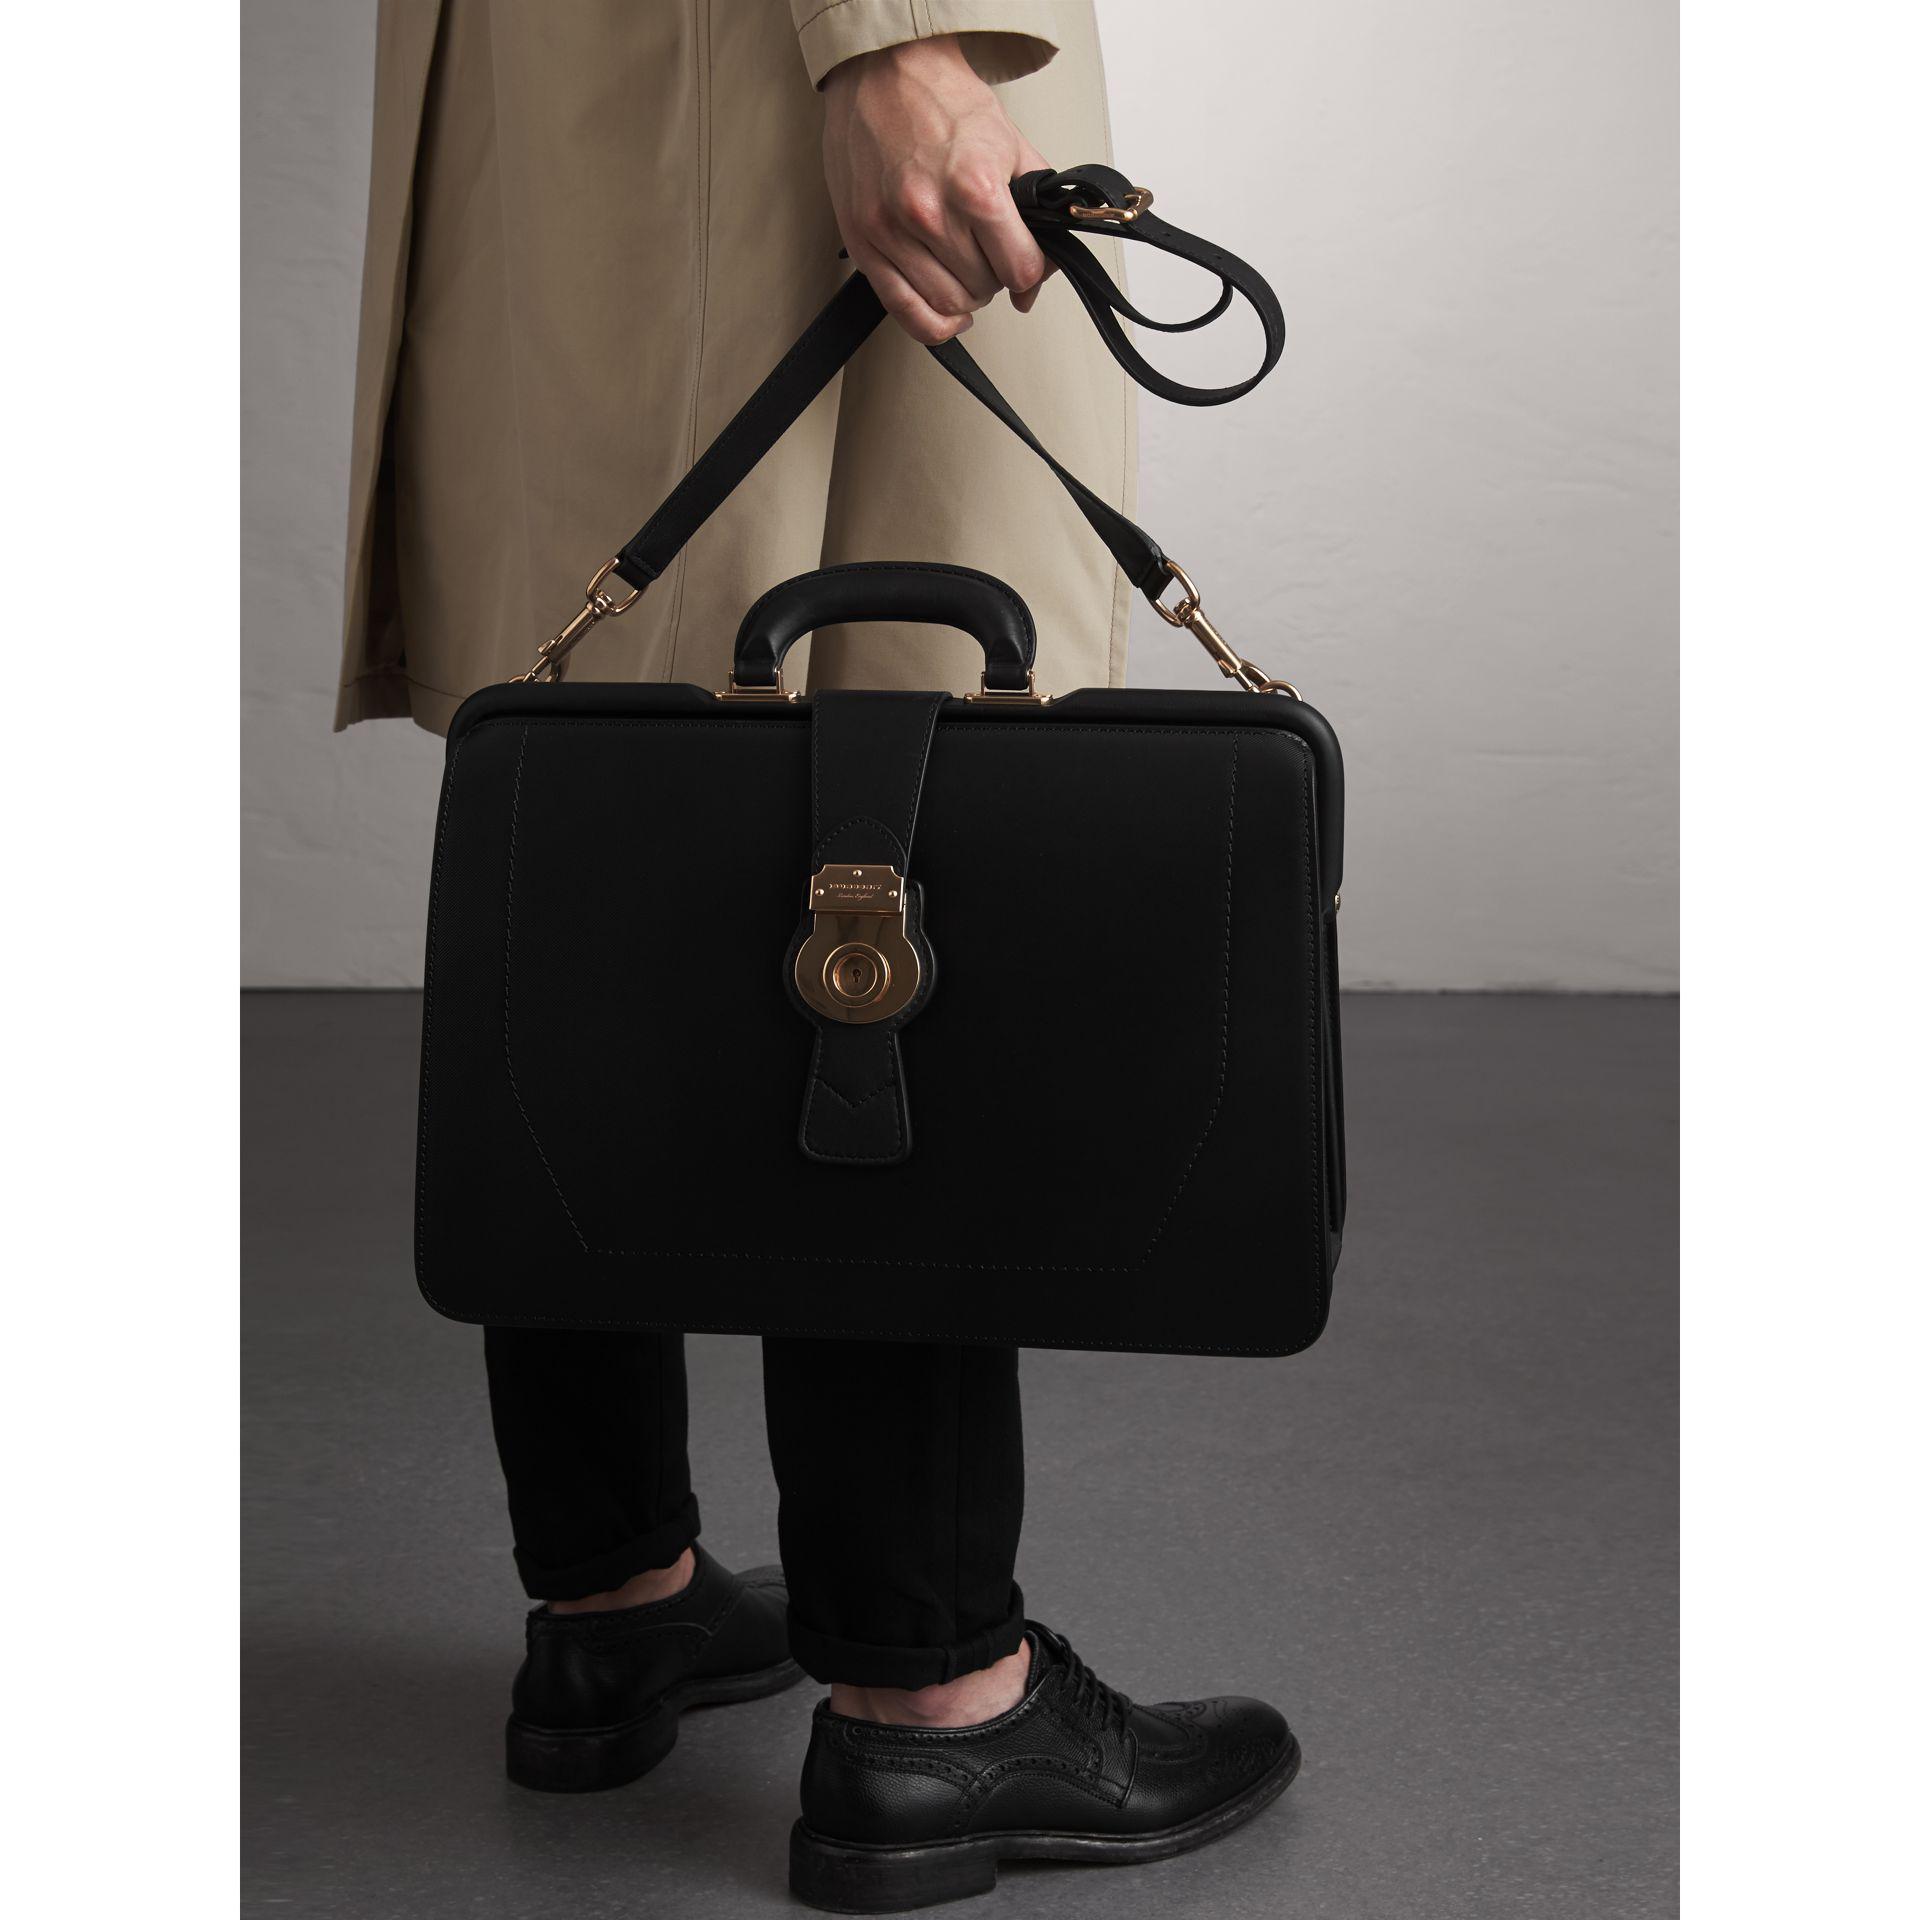 Burberry Dk88 Doctor's Bag in Black for Men